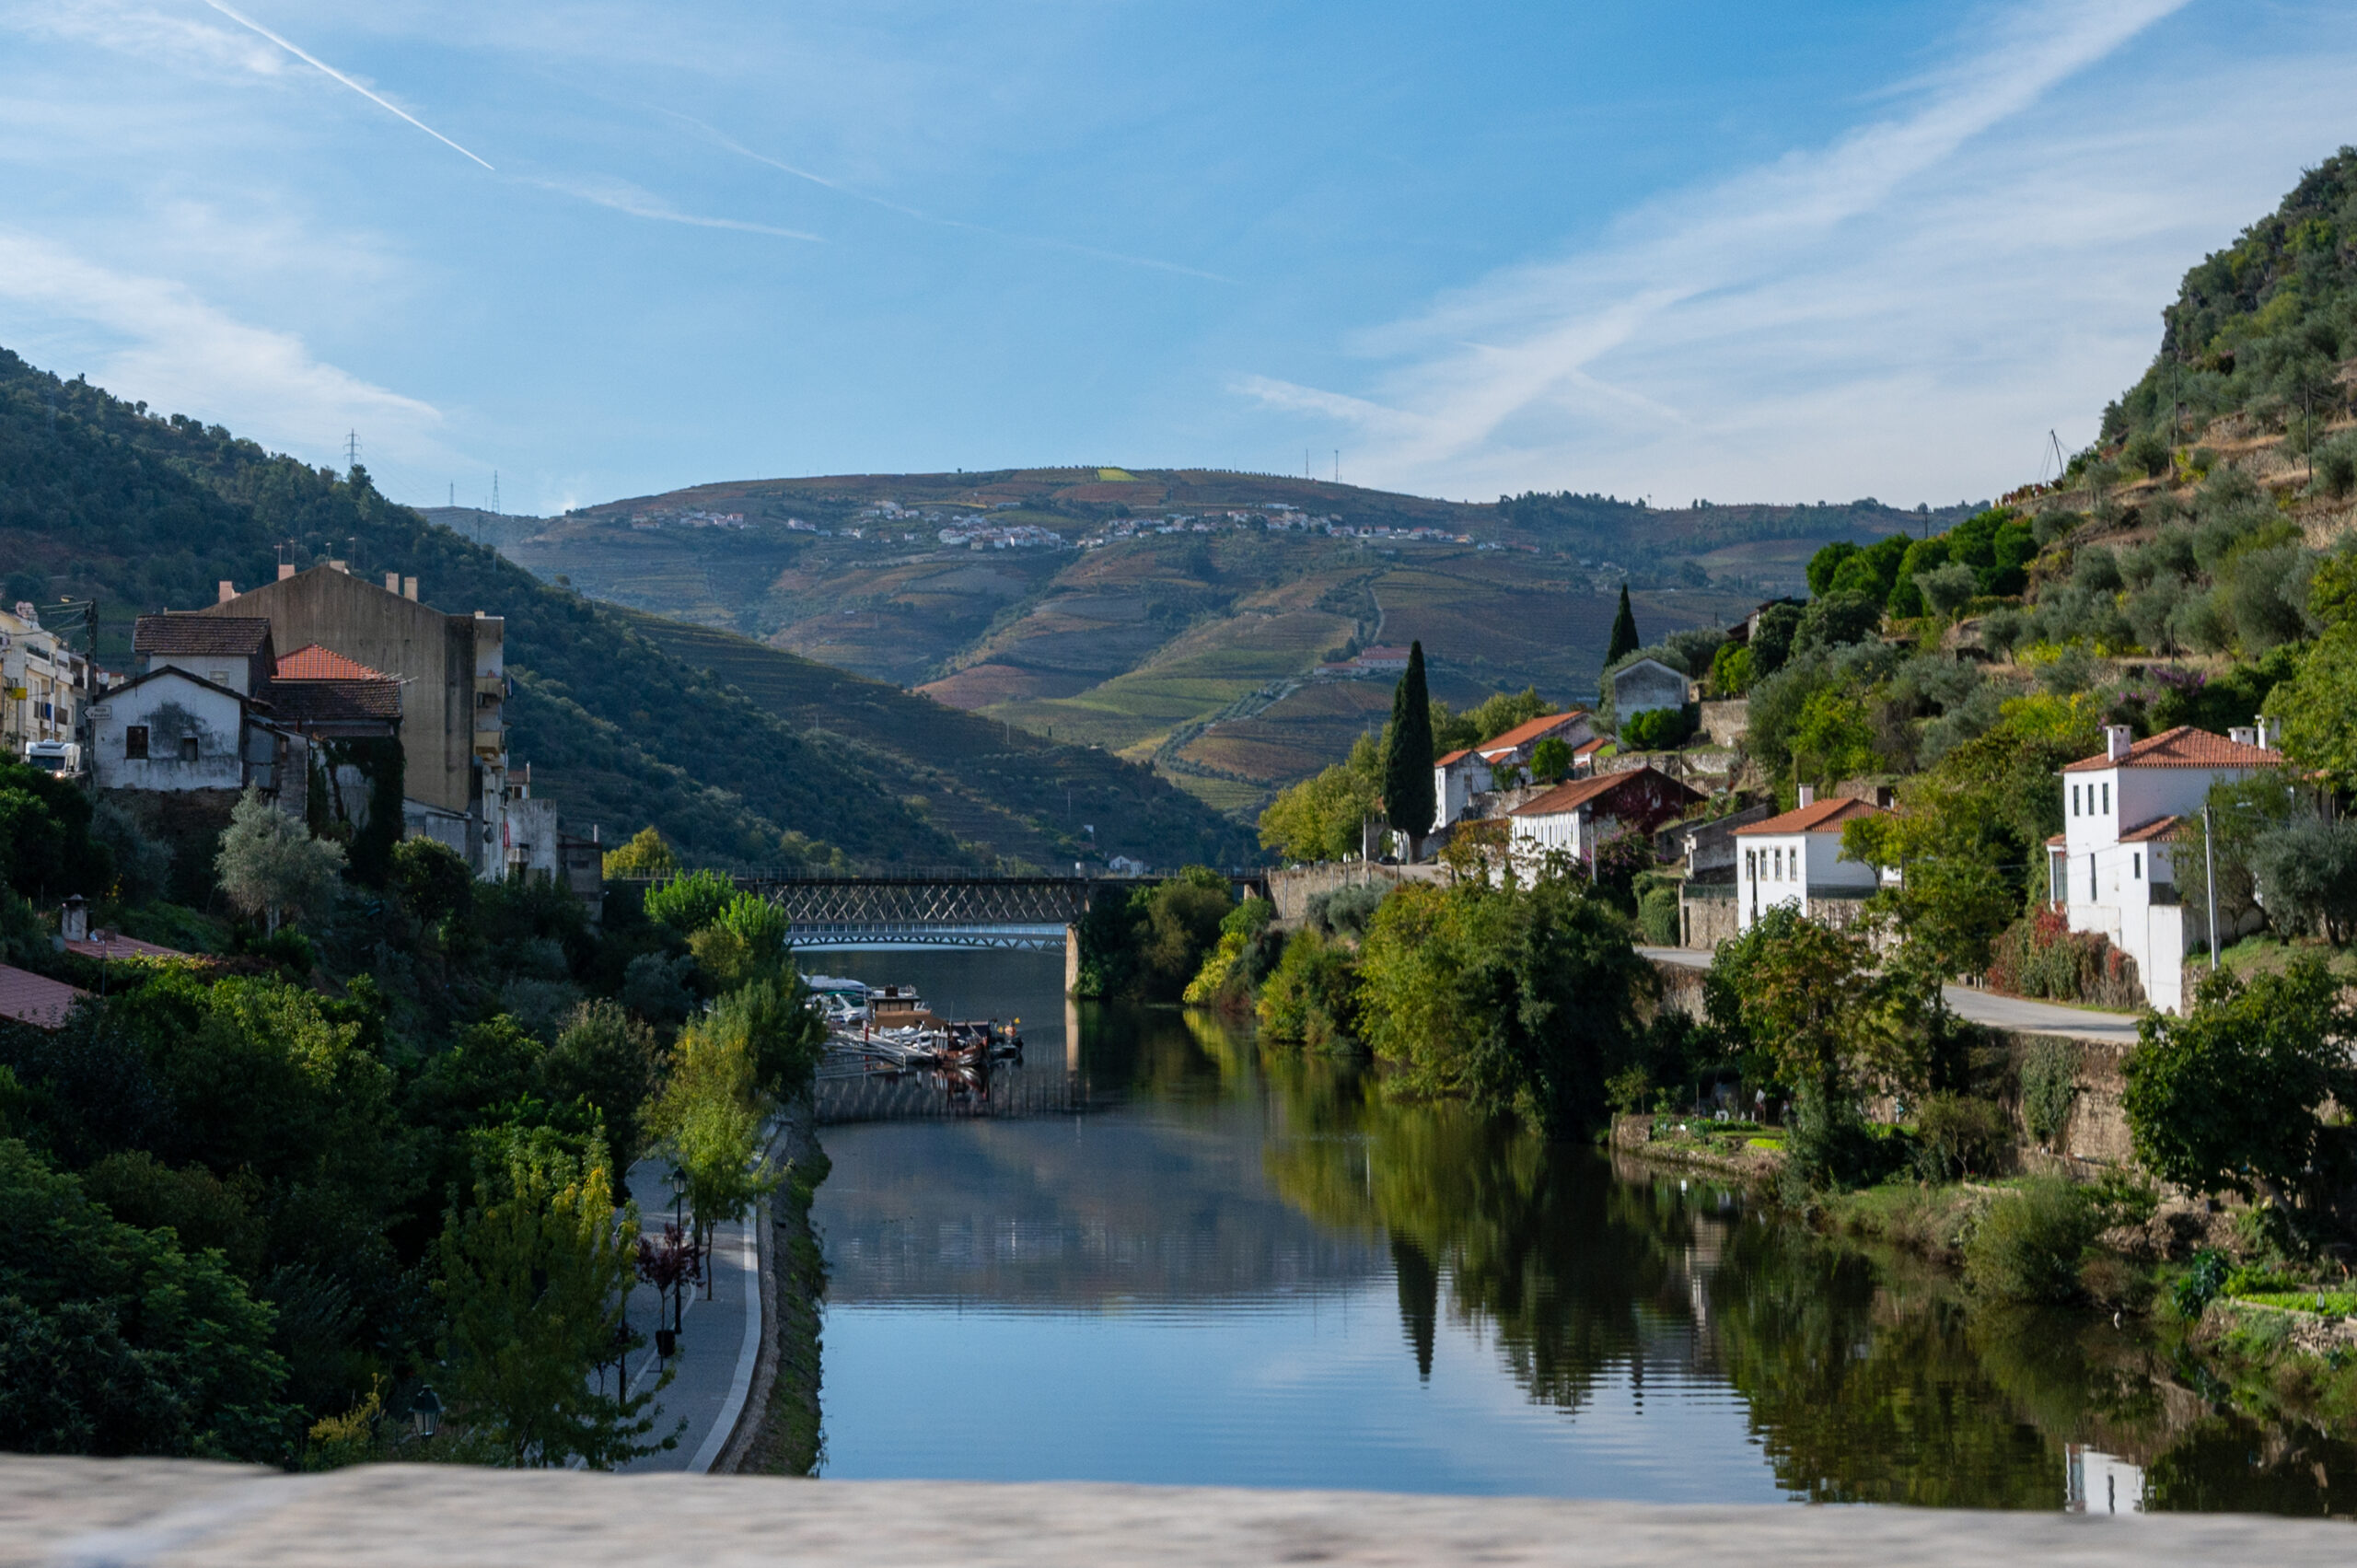 Pinhao and the Douro River